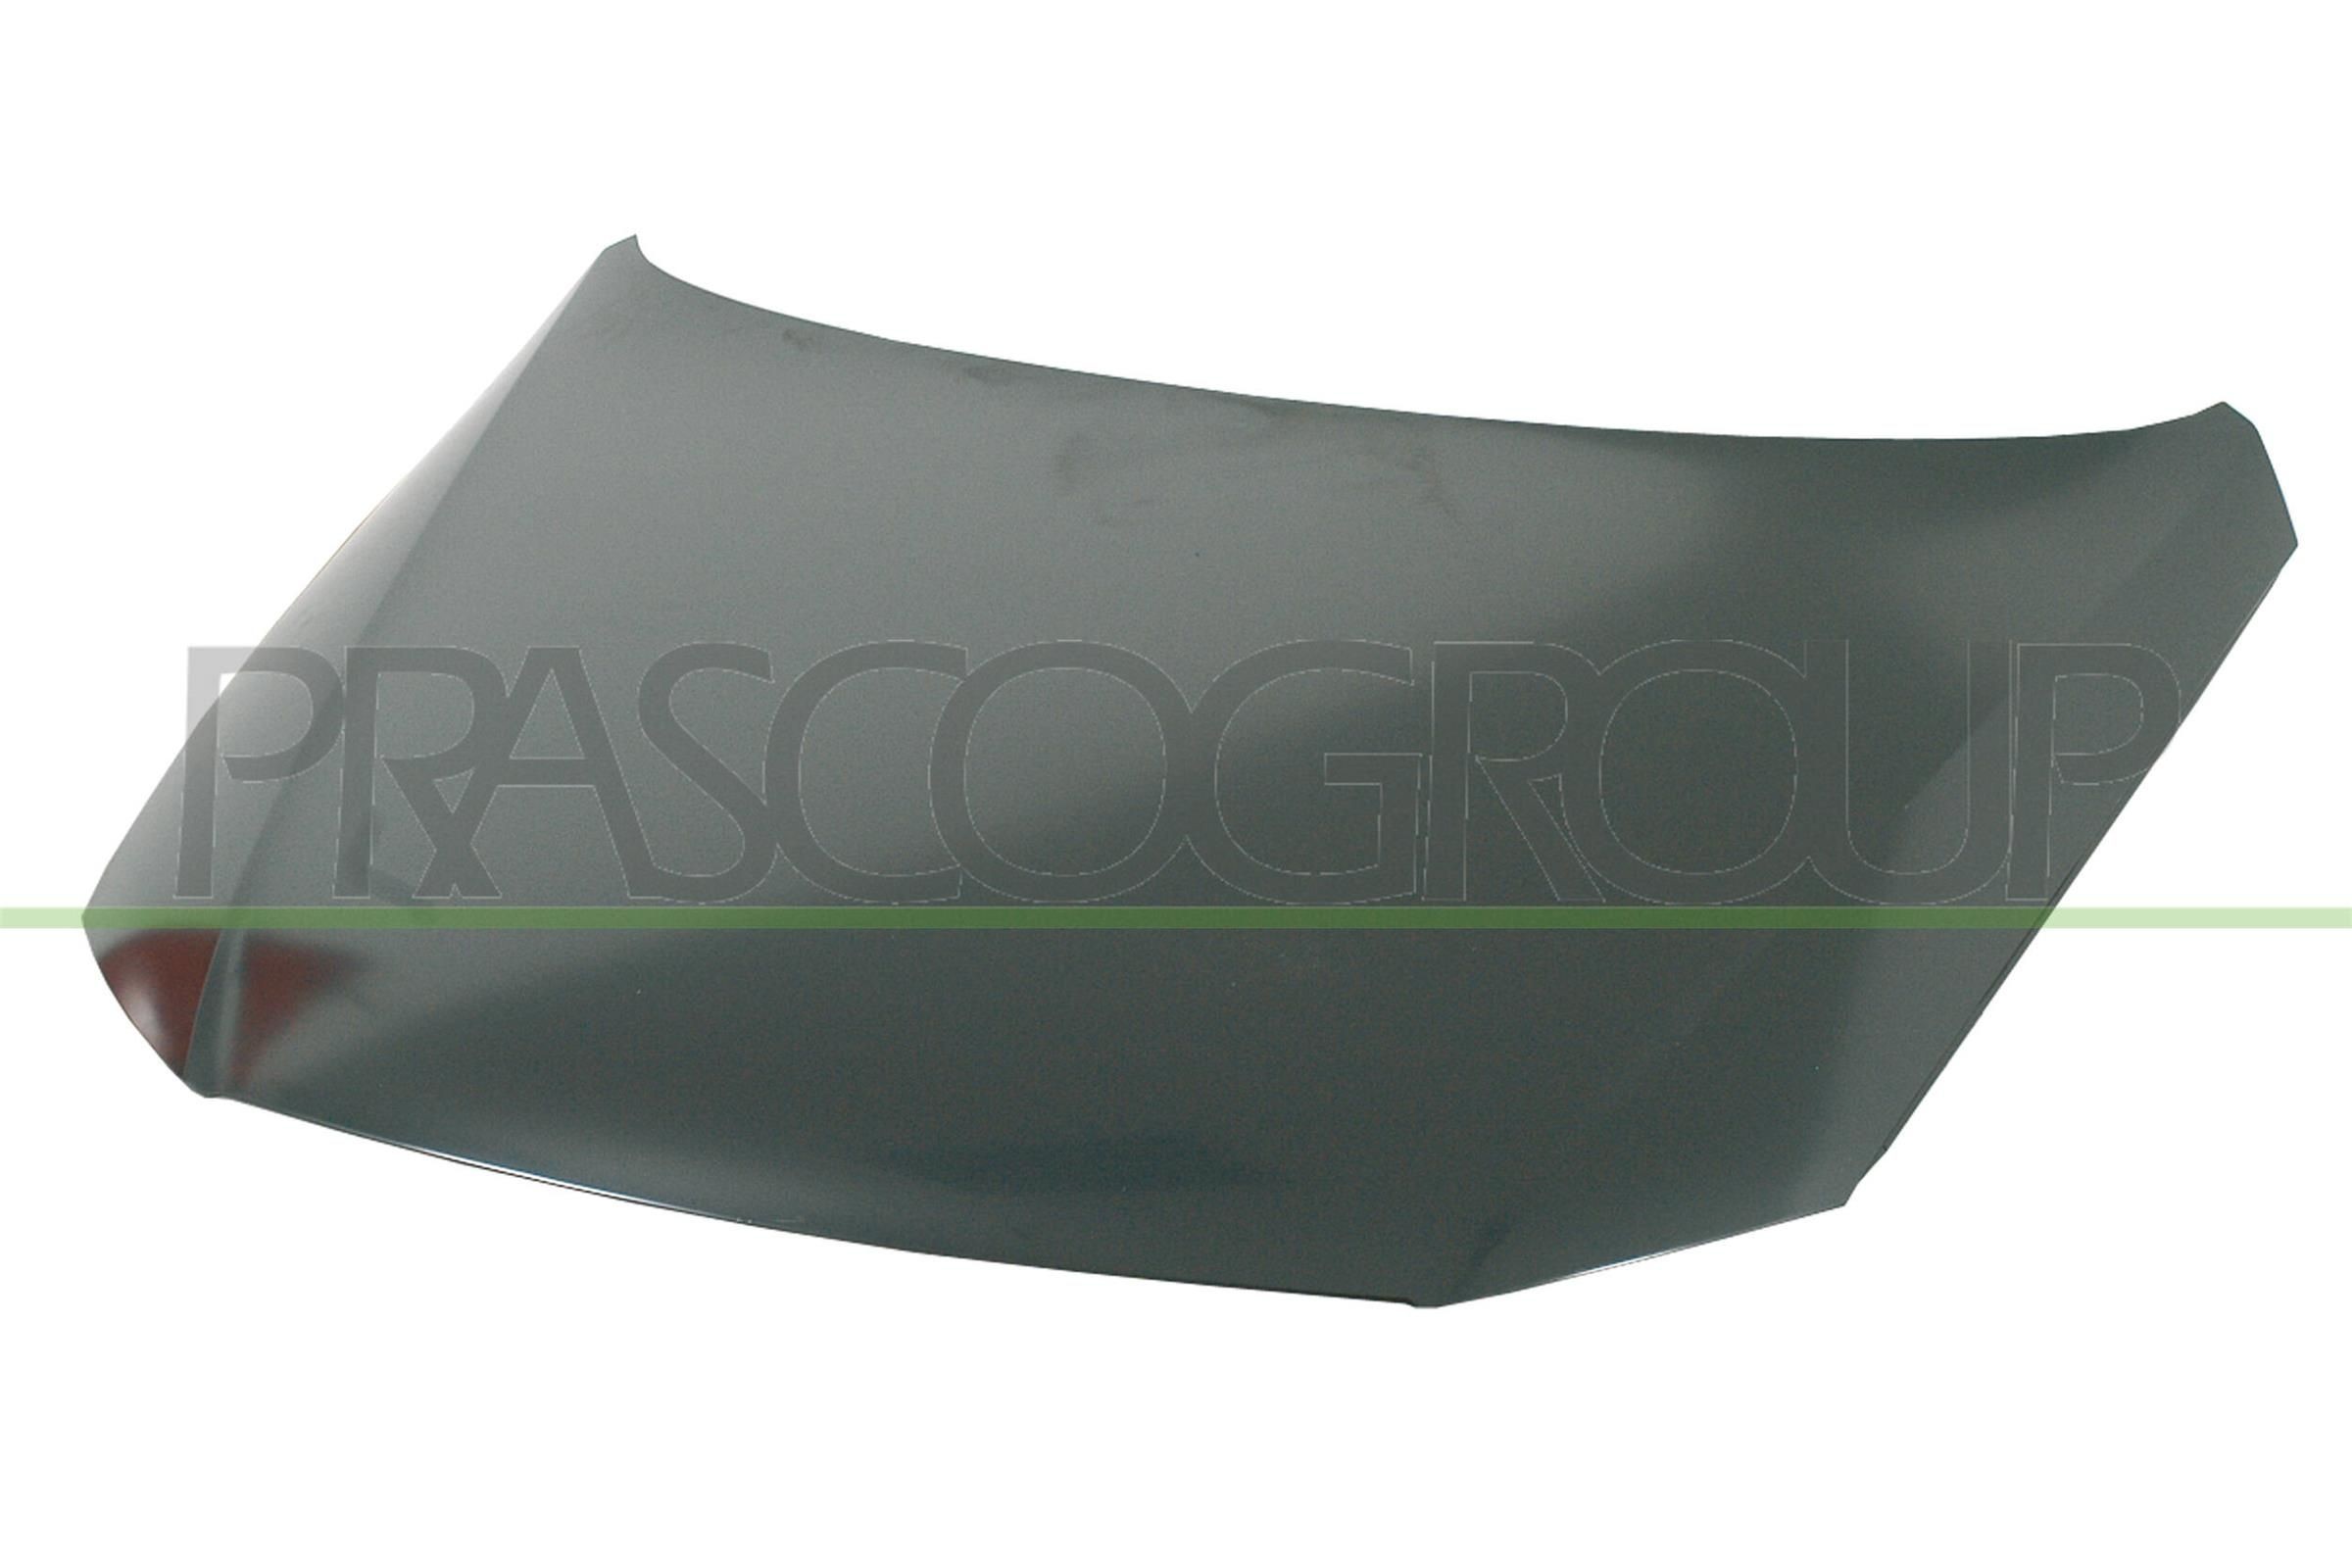 original Passat B6 Variant Hood and parts PRASCO VG0543130